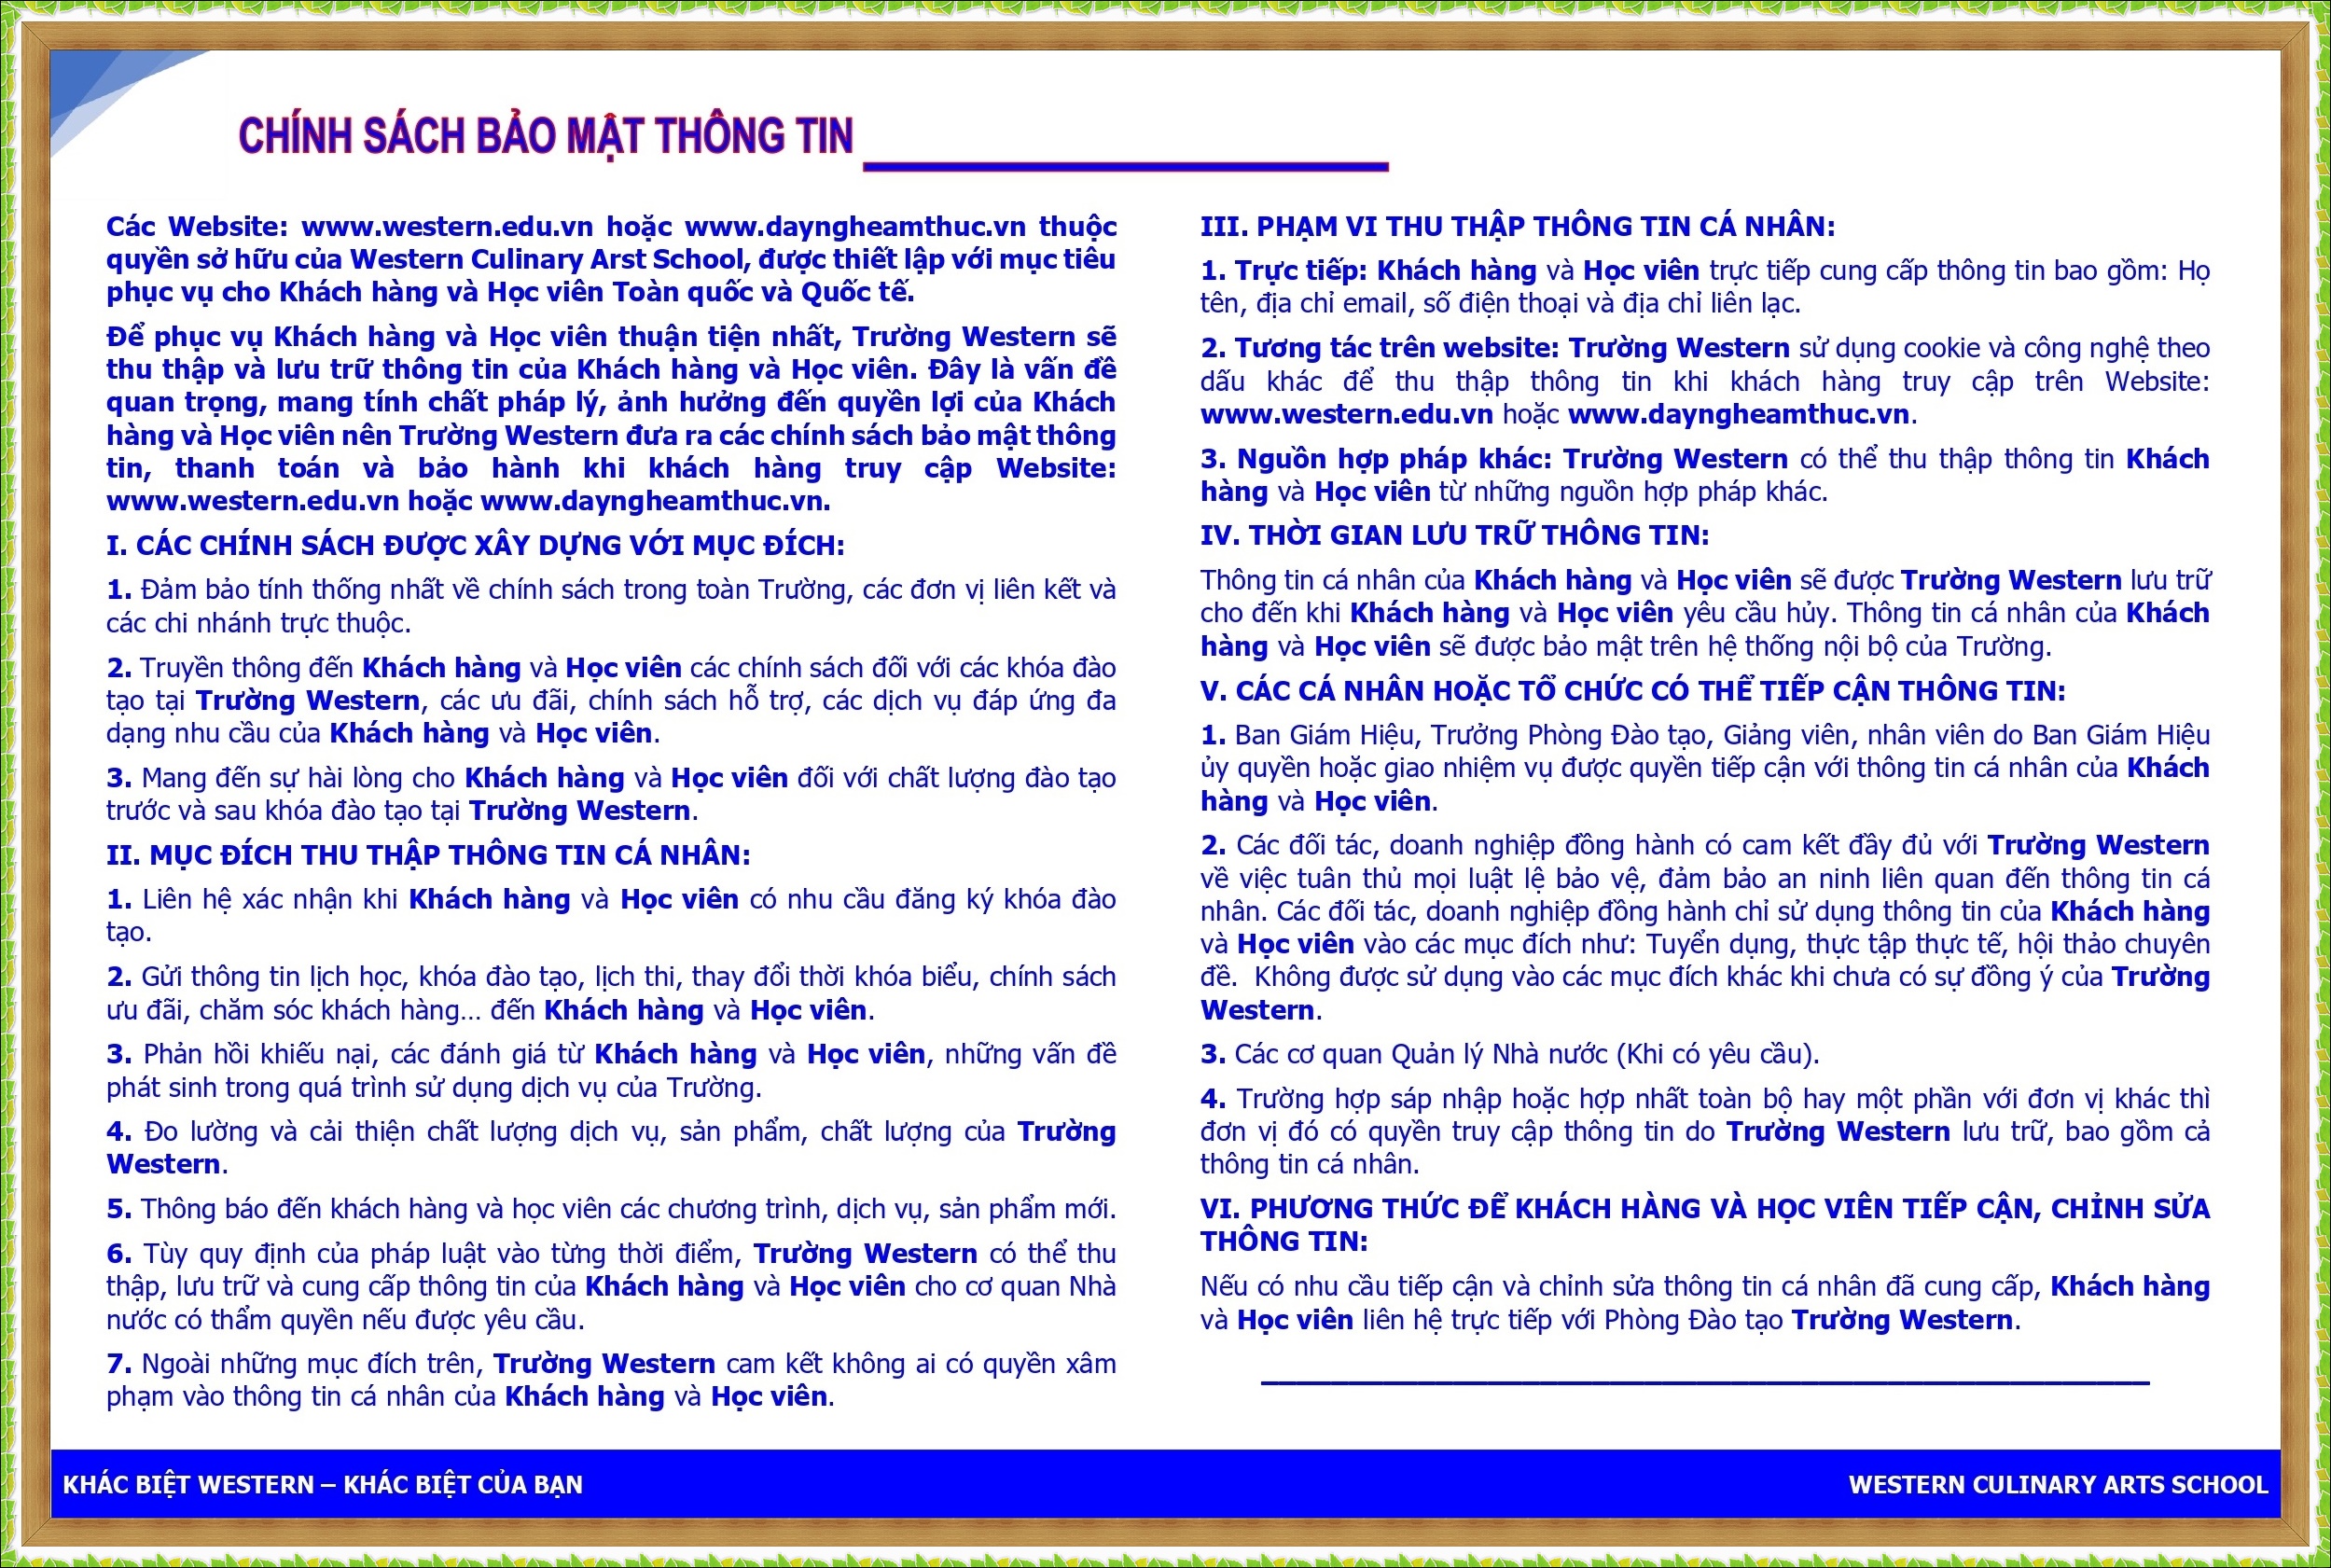 CHINH SACH BAO MAT_page-0001